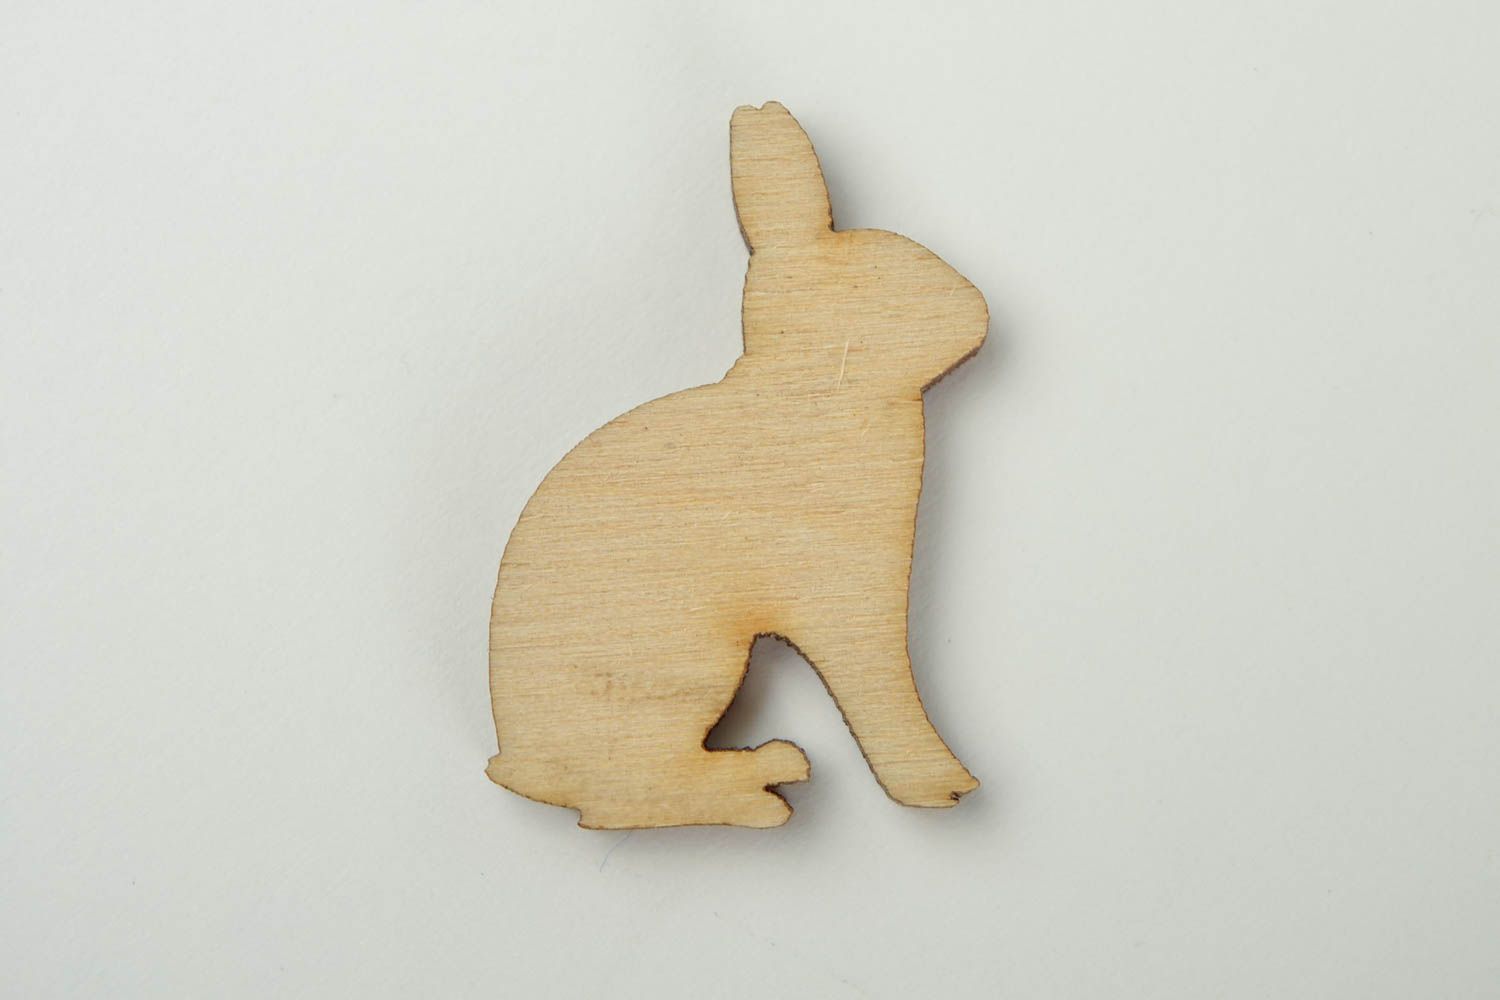 Handmade wooden cute blank unusual goods for creativity art and craft ideas photo 4